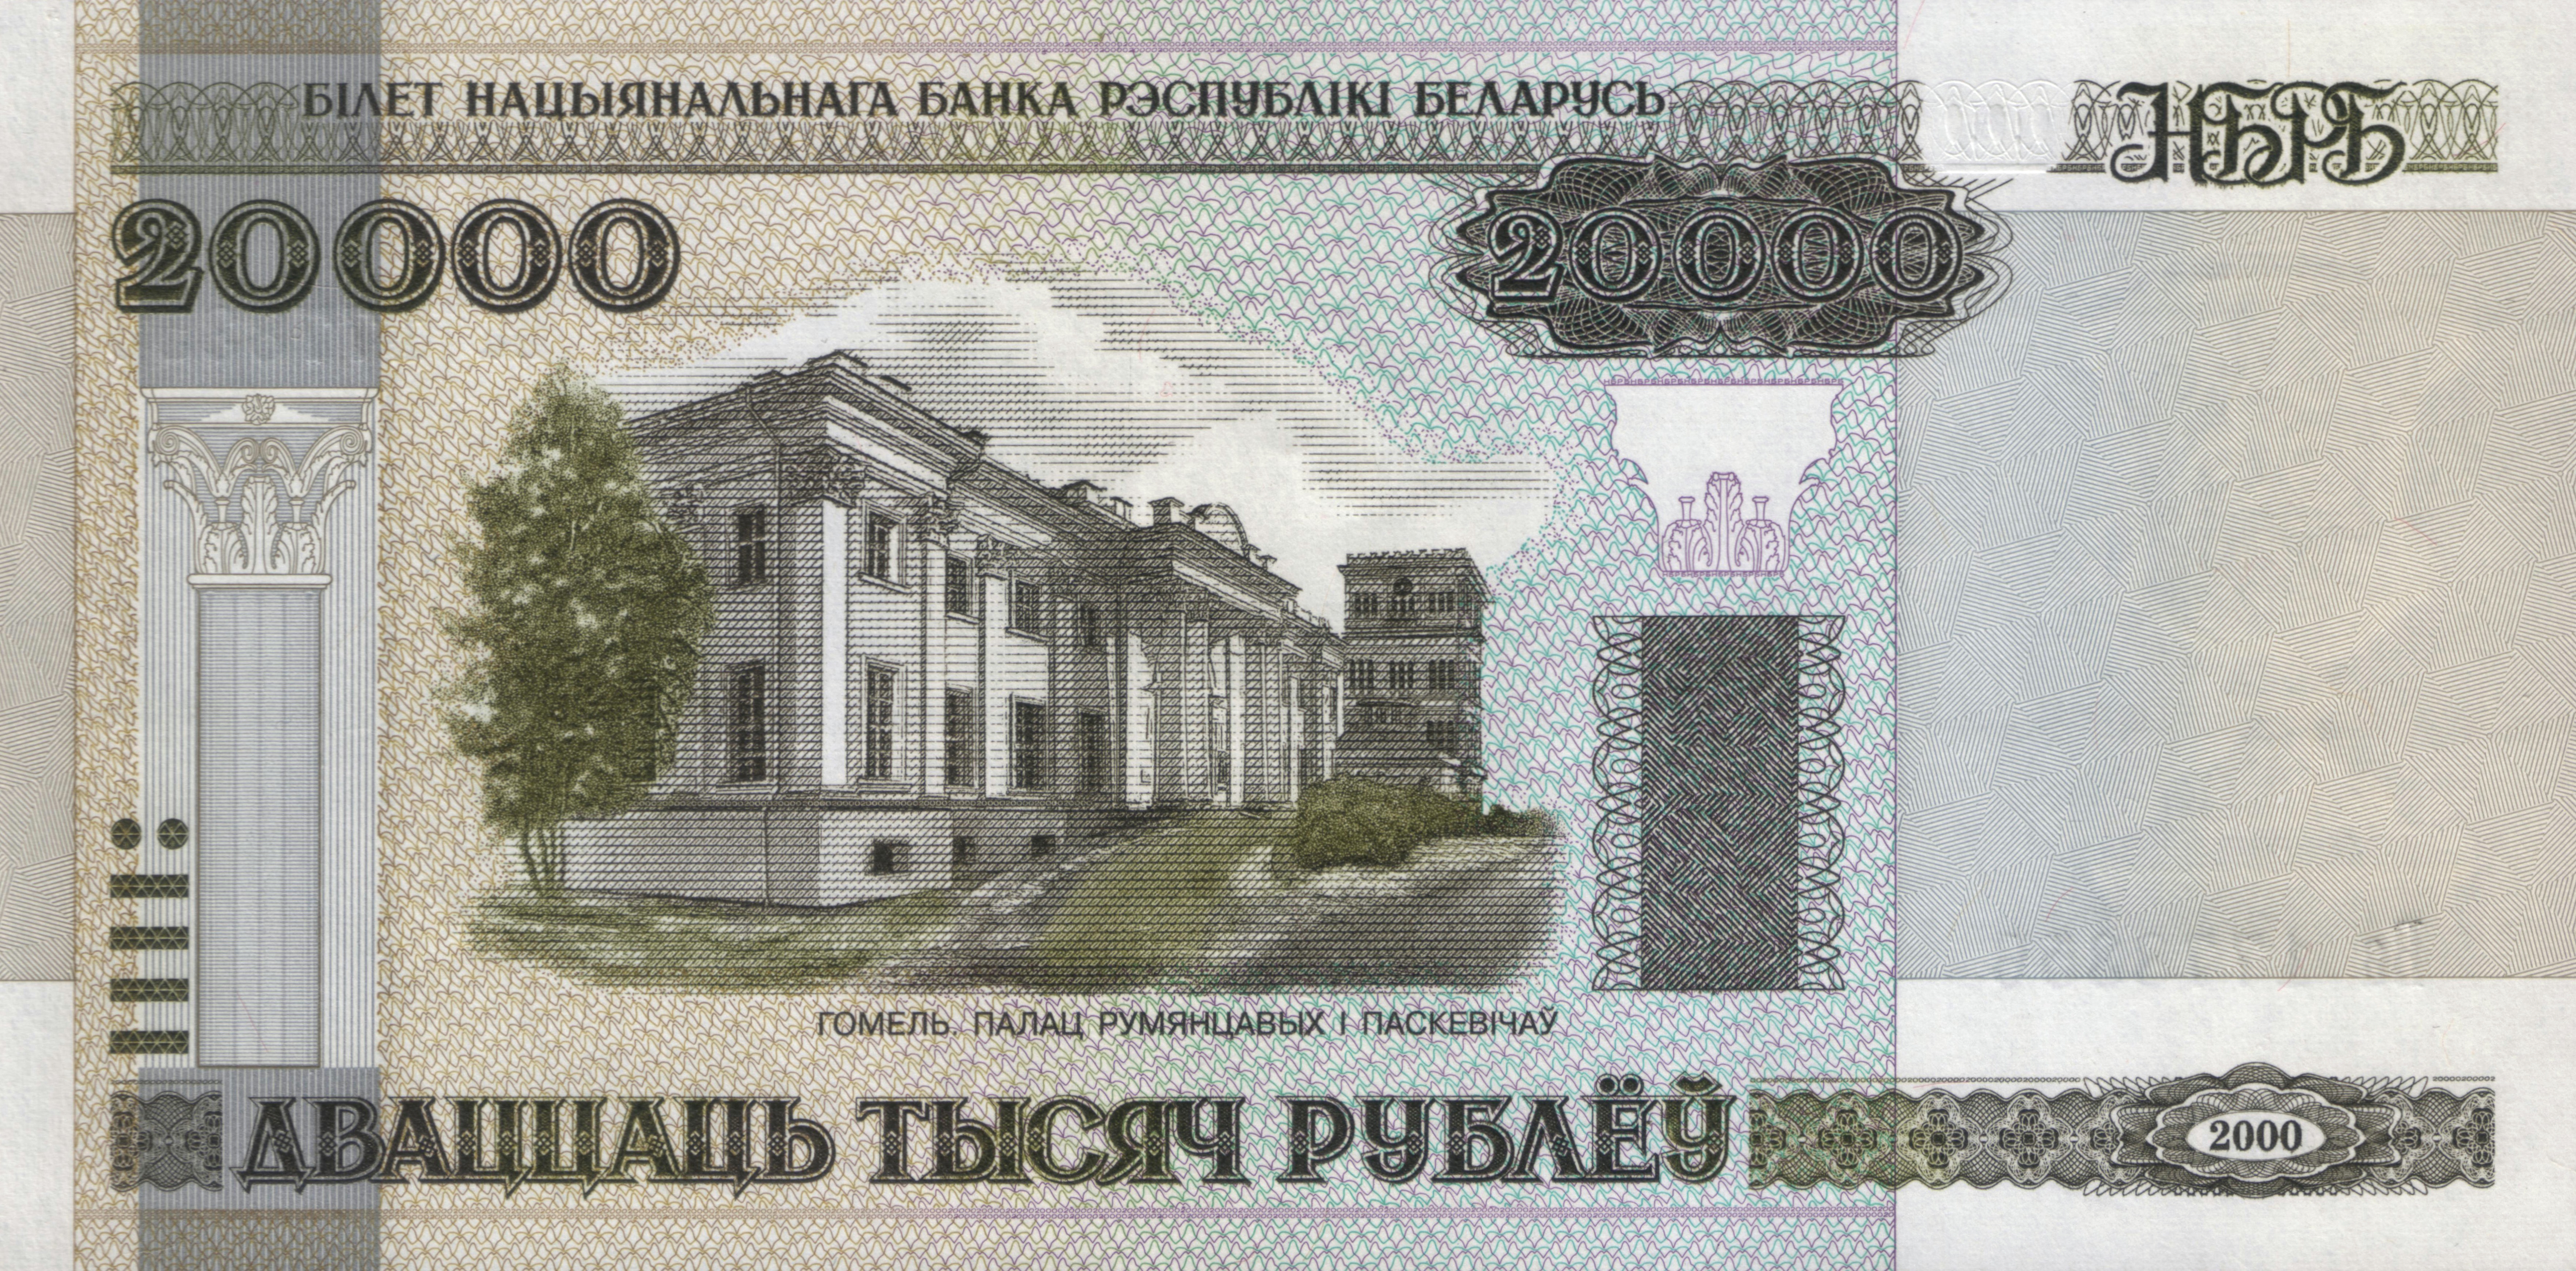 My native Belarus: Belarusian money